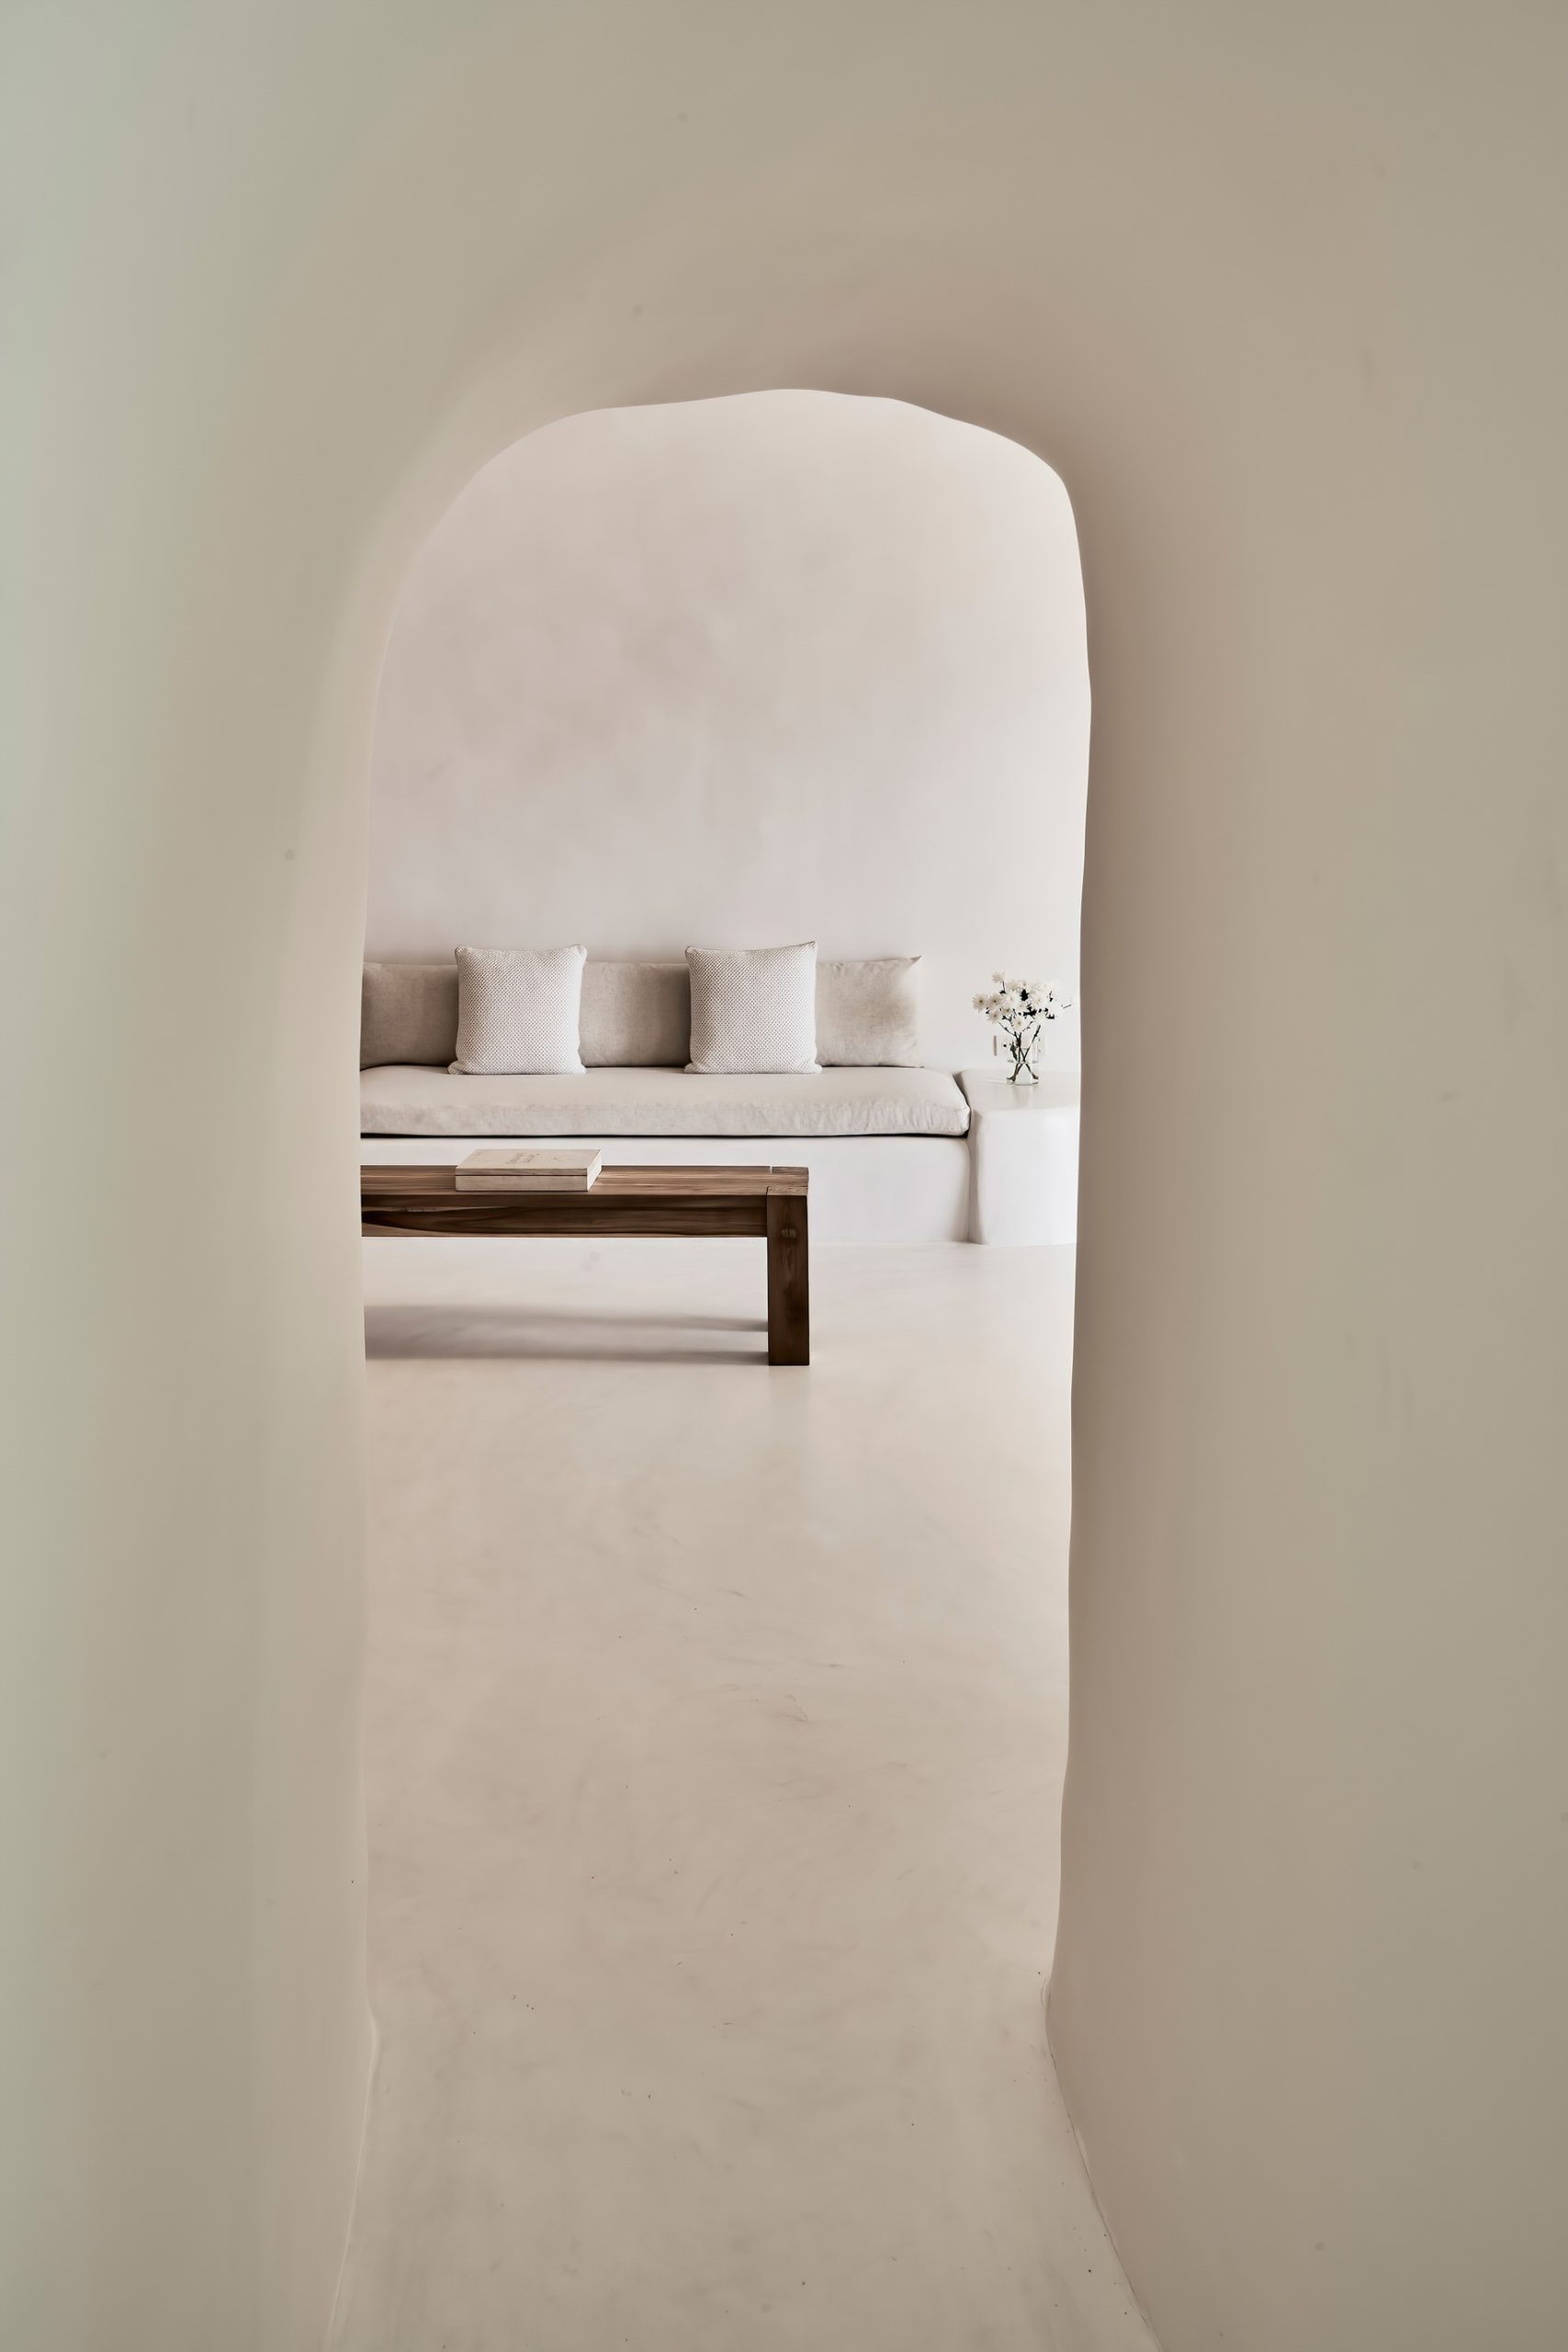 Mystique Hotel Santorini – Oia, Santorini Island, Greece – Mystery Villa